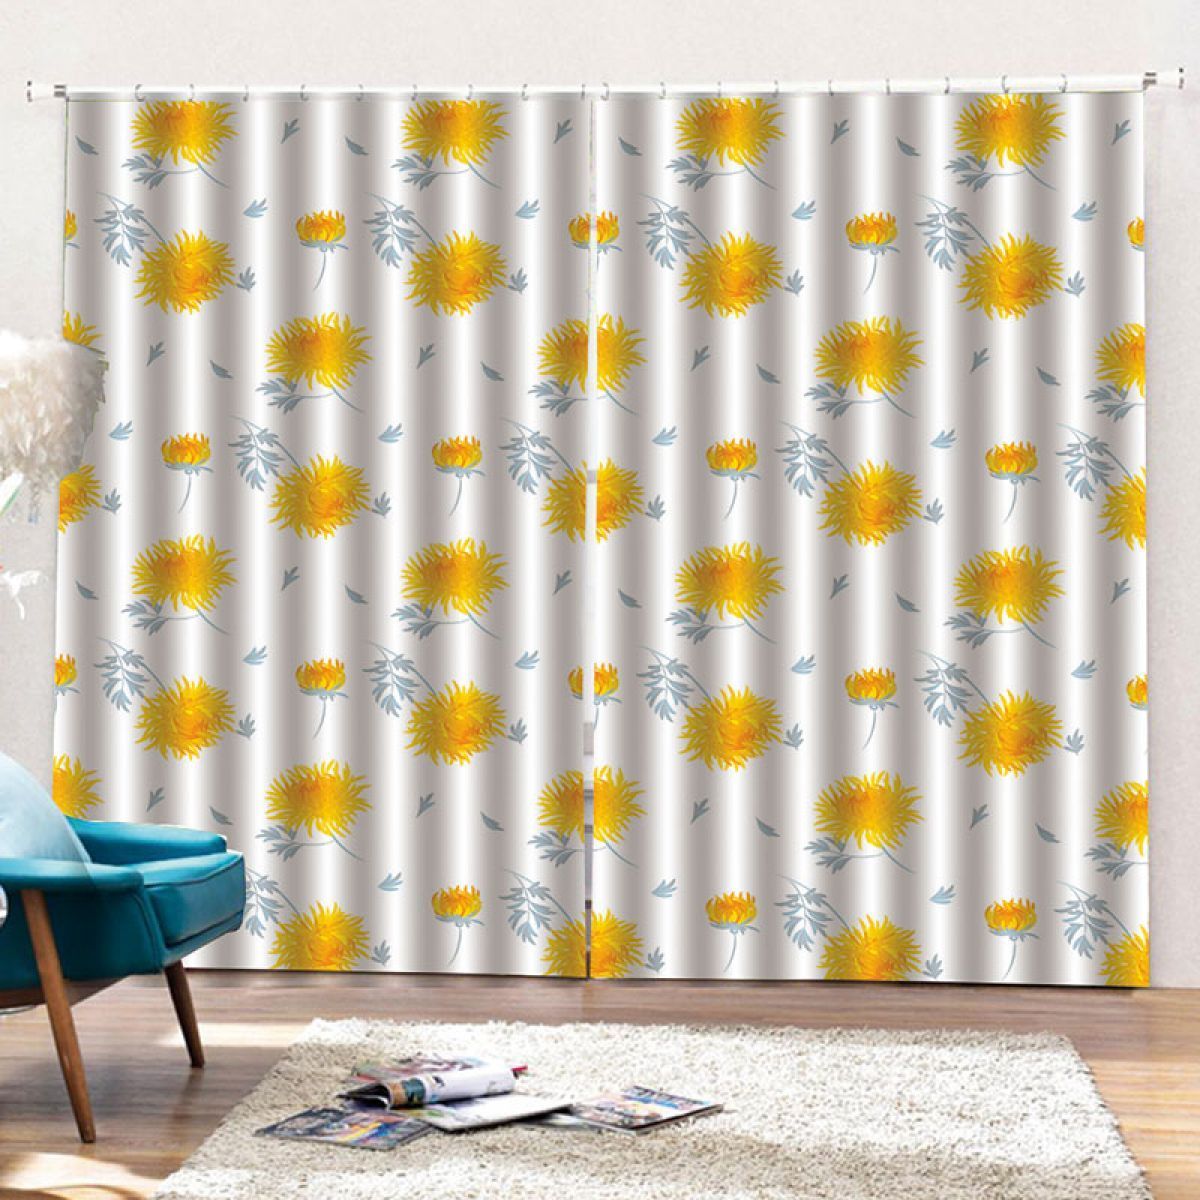 chrysanthemum yellow and white printed window curtain home decor 2100